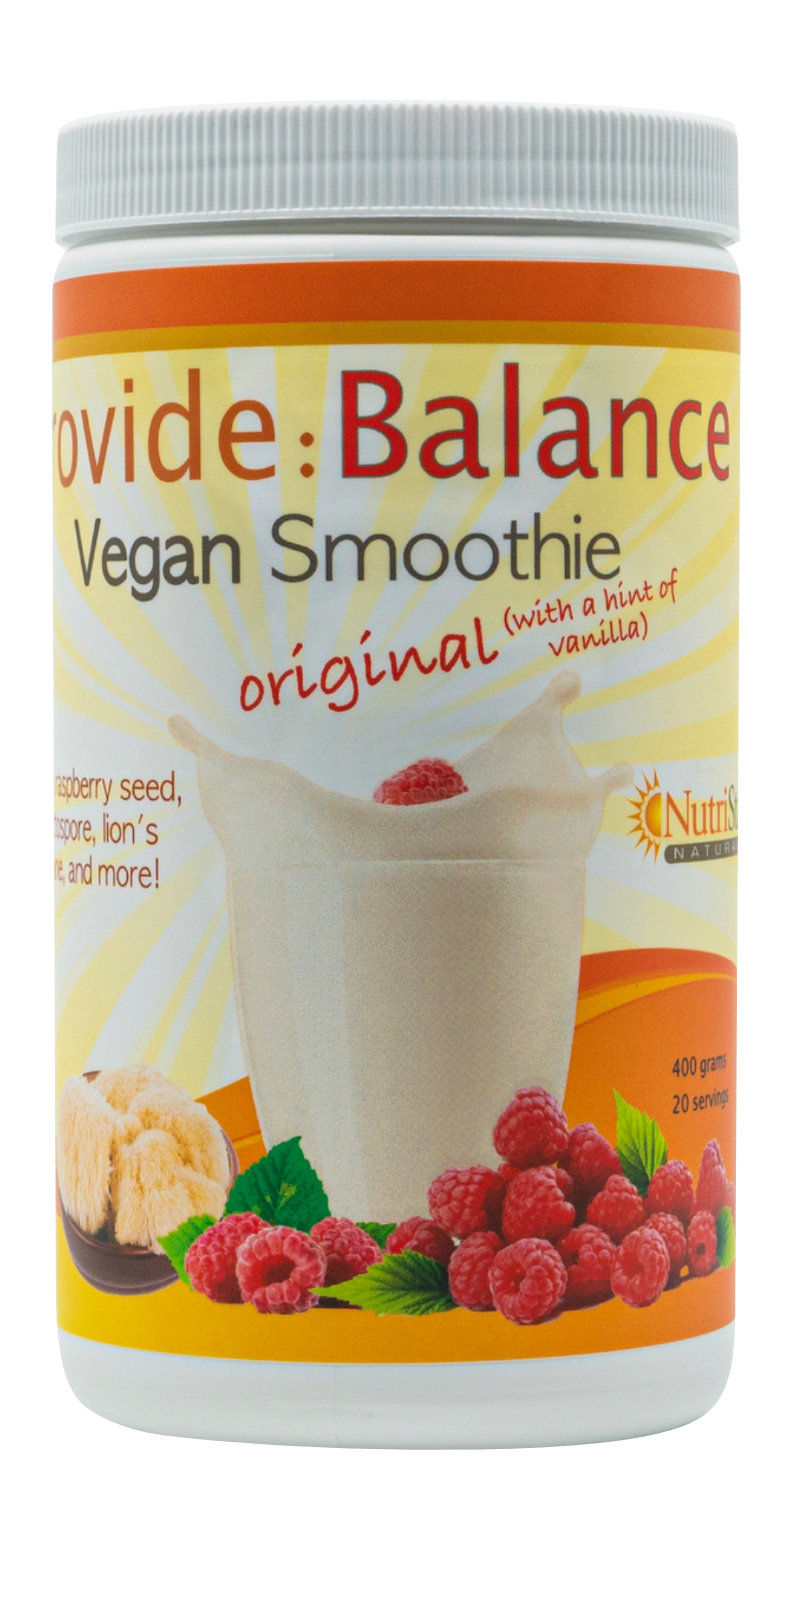 NutriStart Provide: Balance Vegan Smoothie 400g